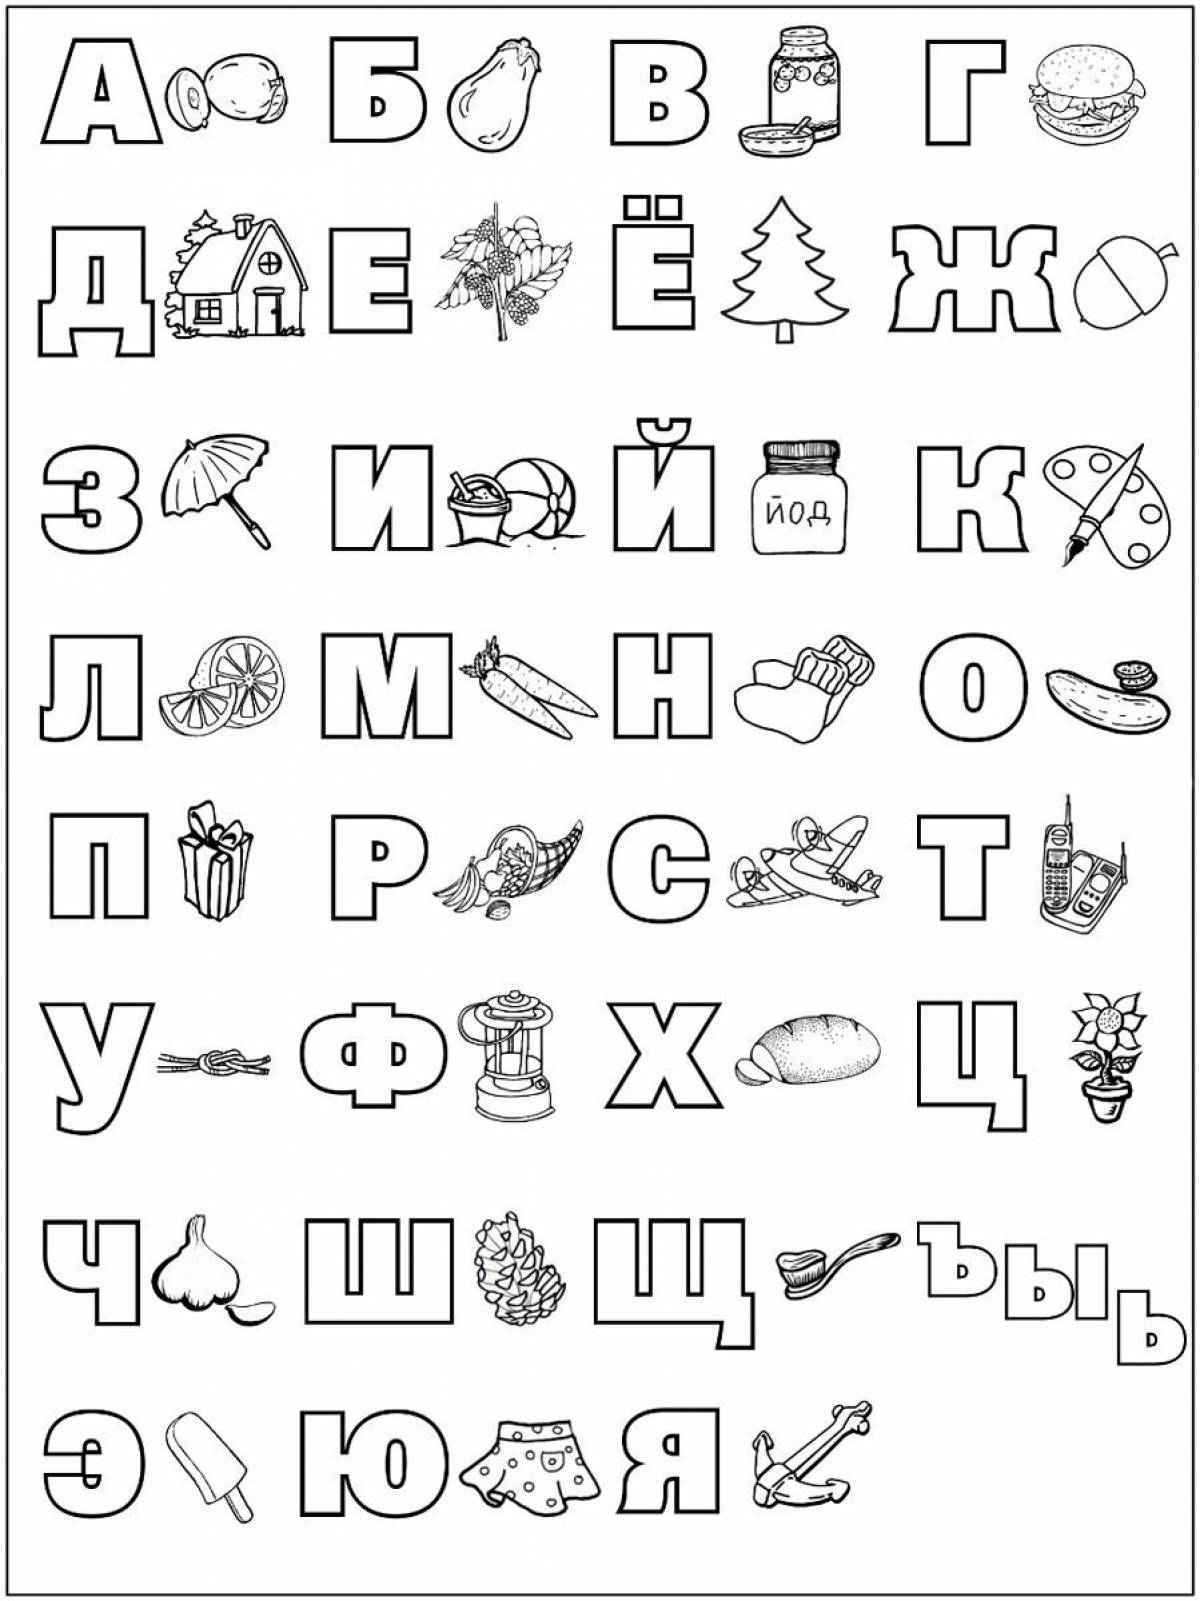 Colour-blast alphabet lore